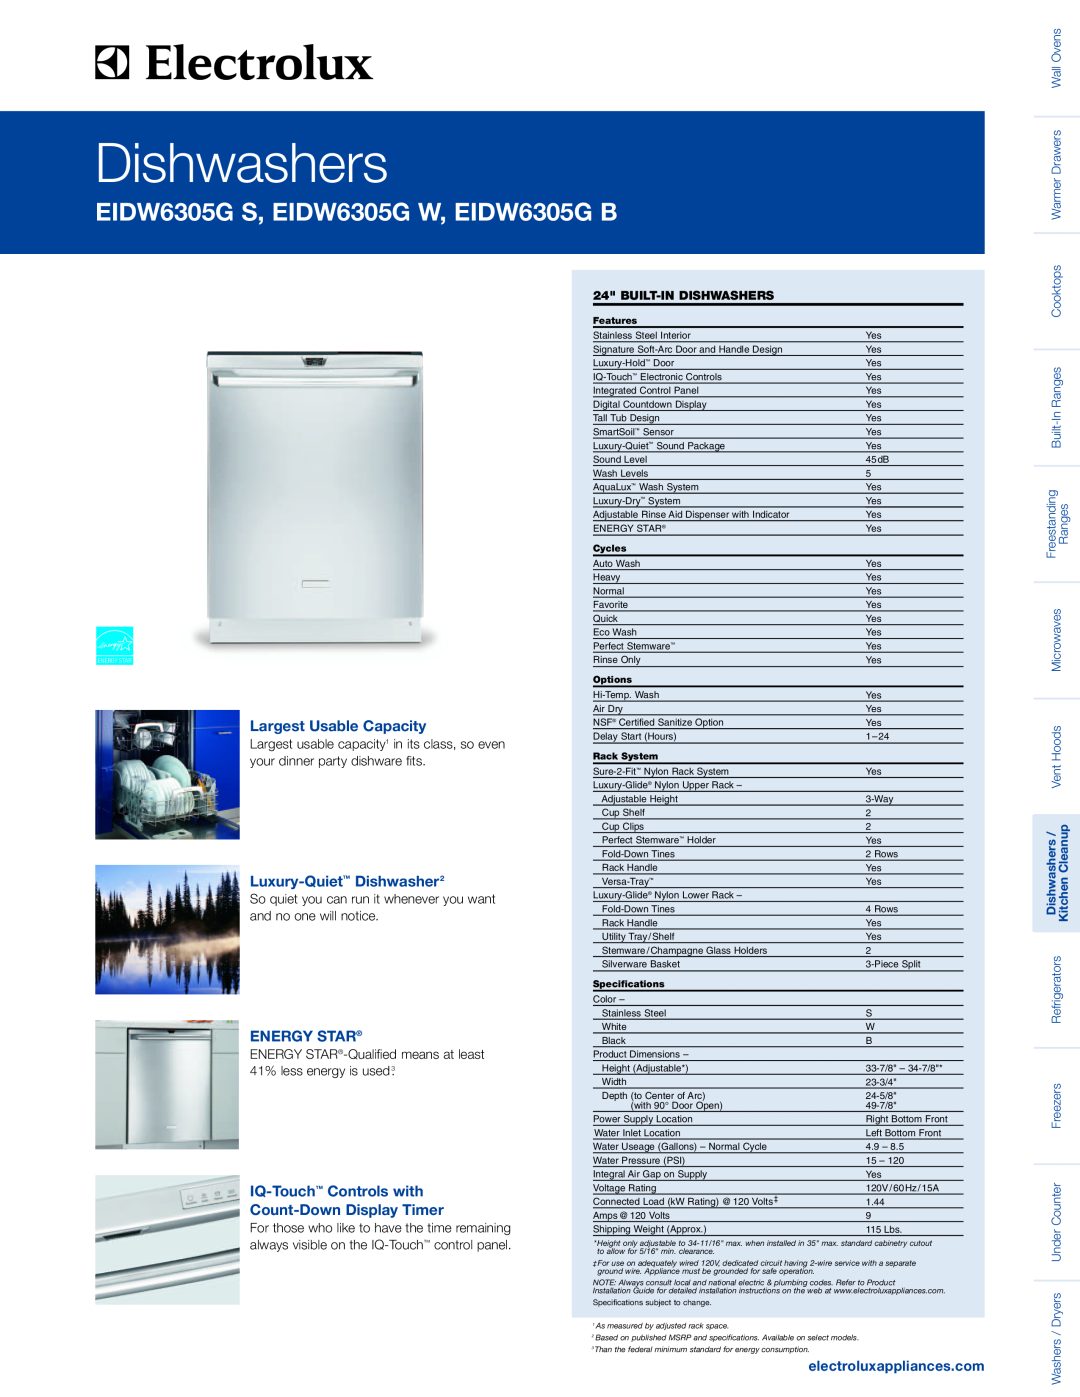 Electrolux EIDW6305GS specifications Largest Usable Capacity, Luxury-Quiet Dishwasher2, Energy Star, Dishwashers 